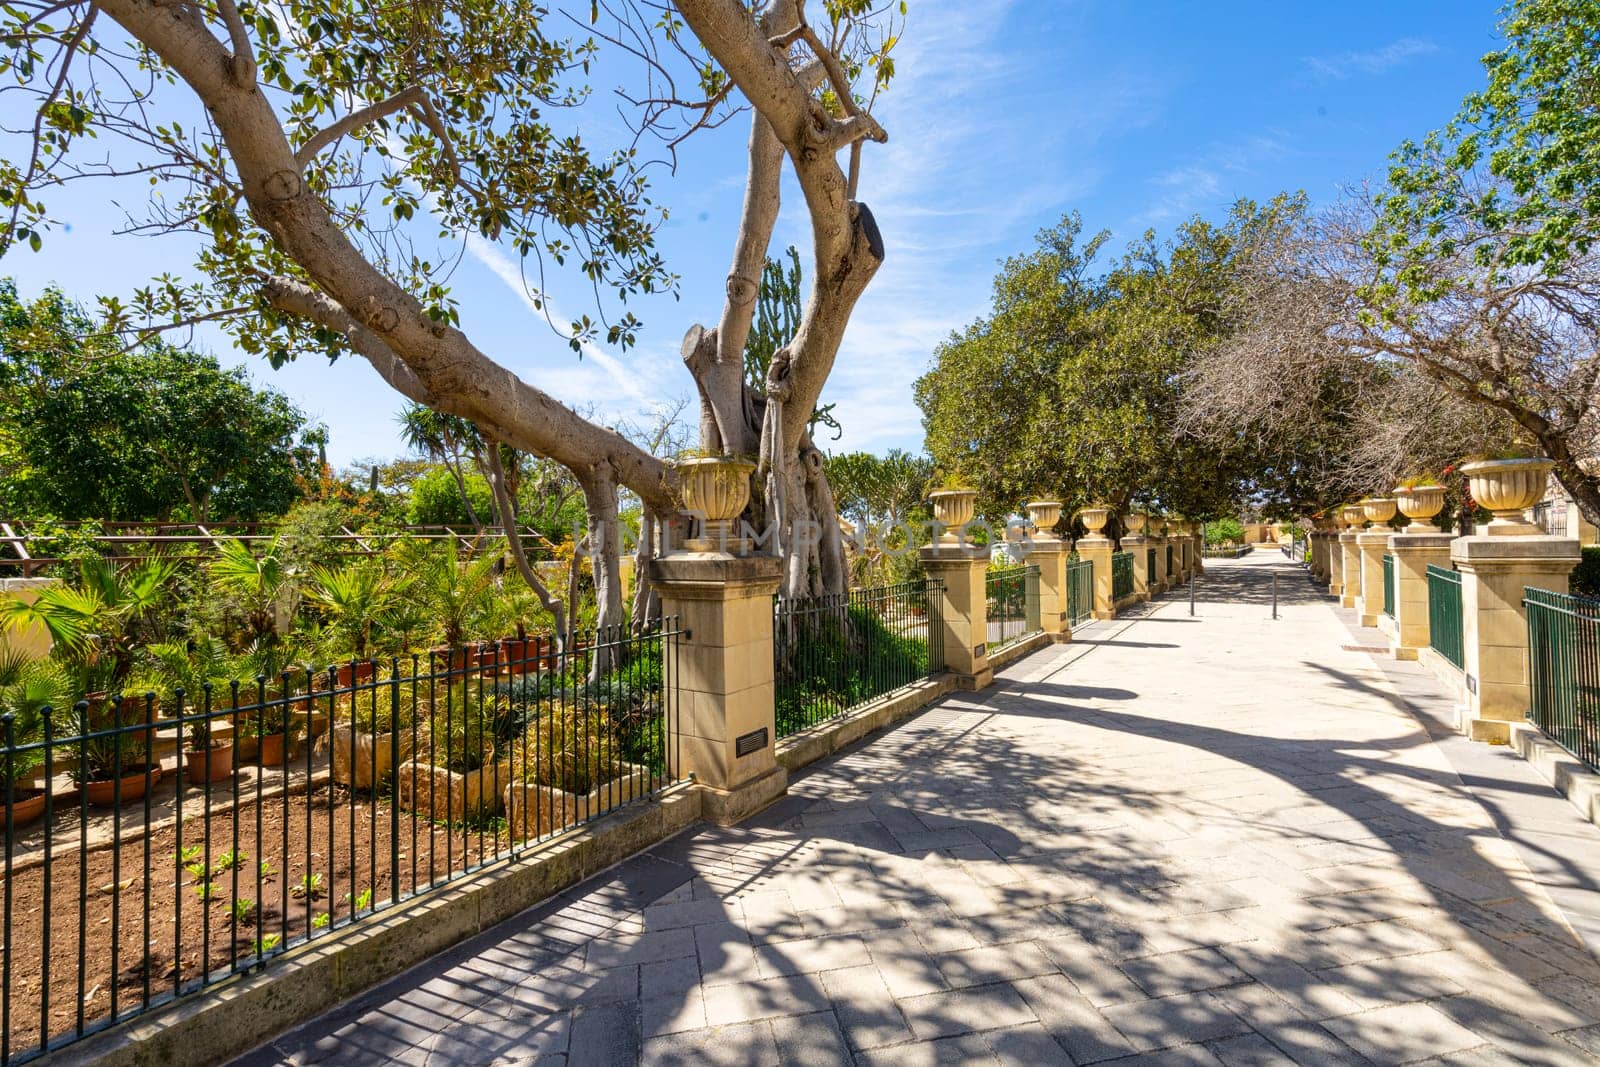 Argotti botanic gardens in Valletta, Malta by sergiodv